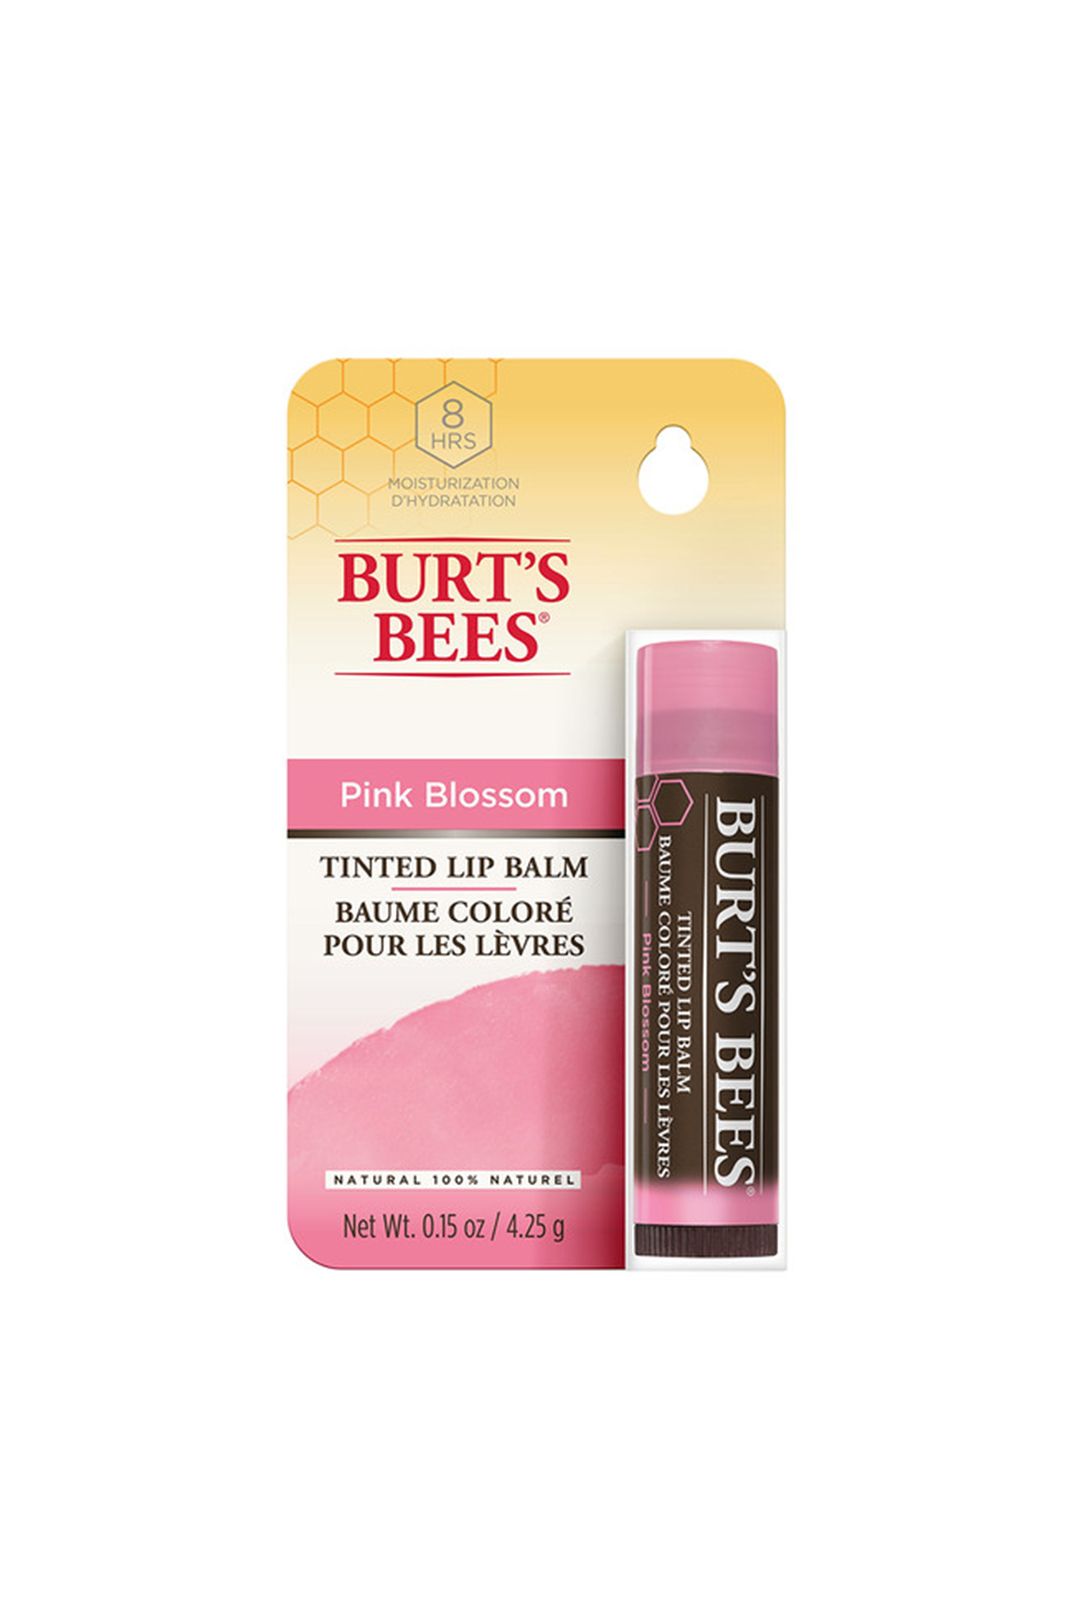 burts-bees-lip-balm-tinted-pink-blossom